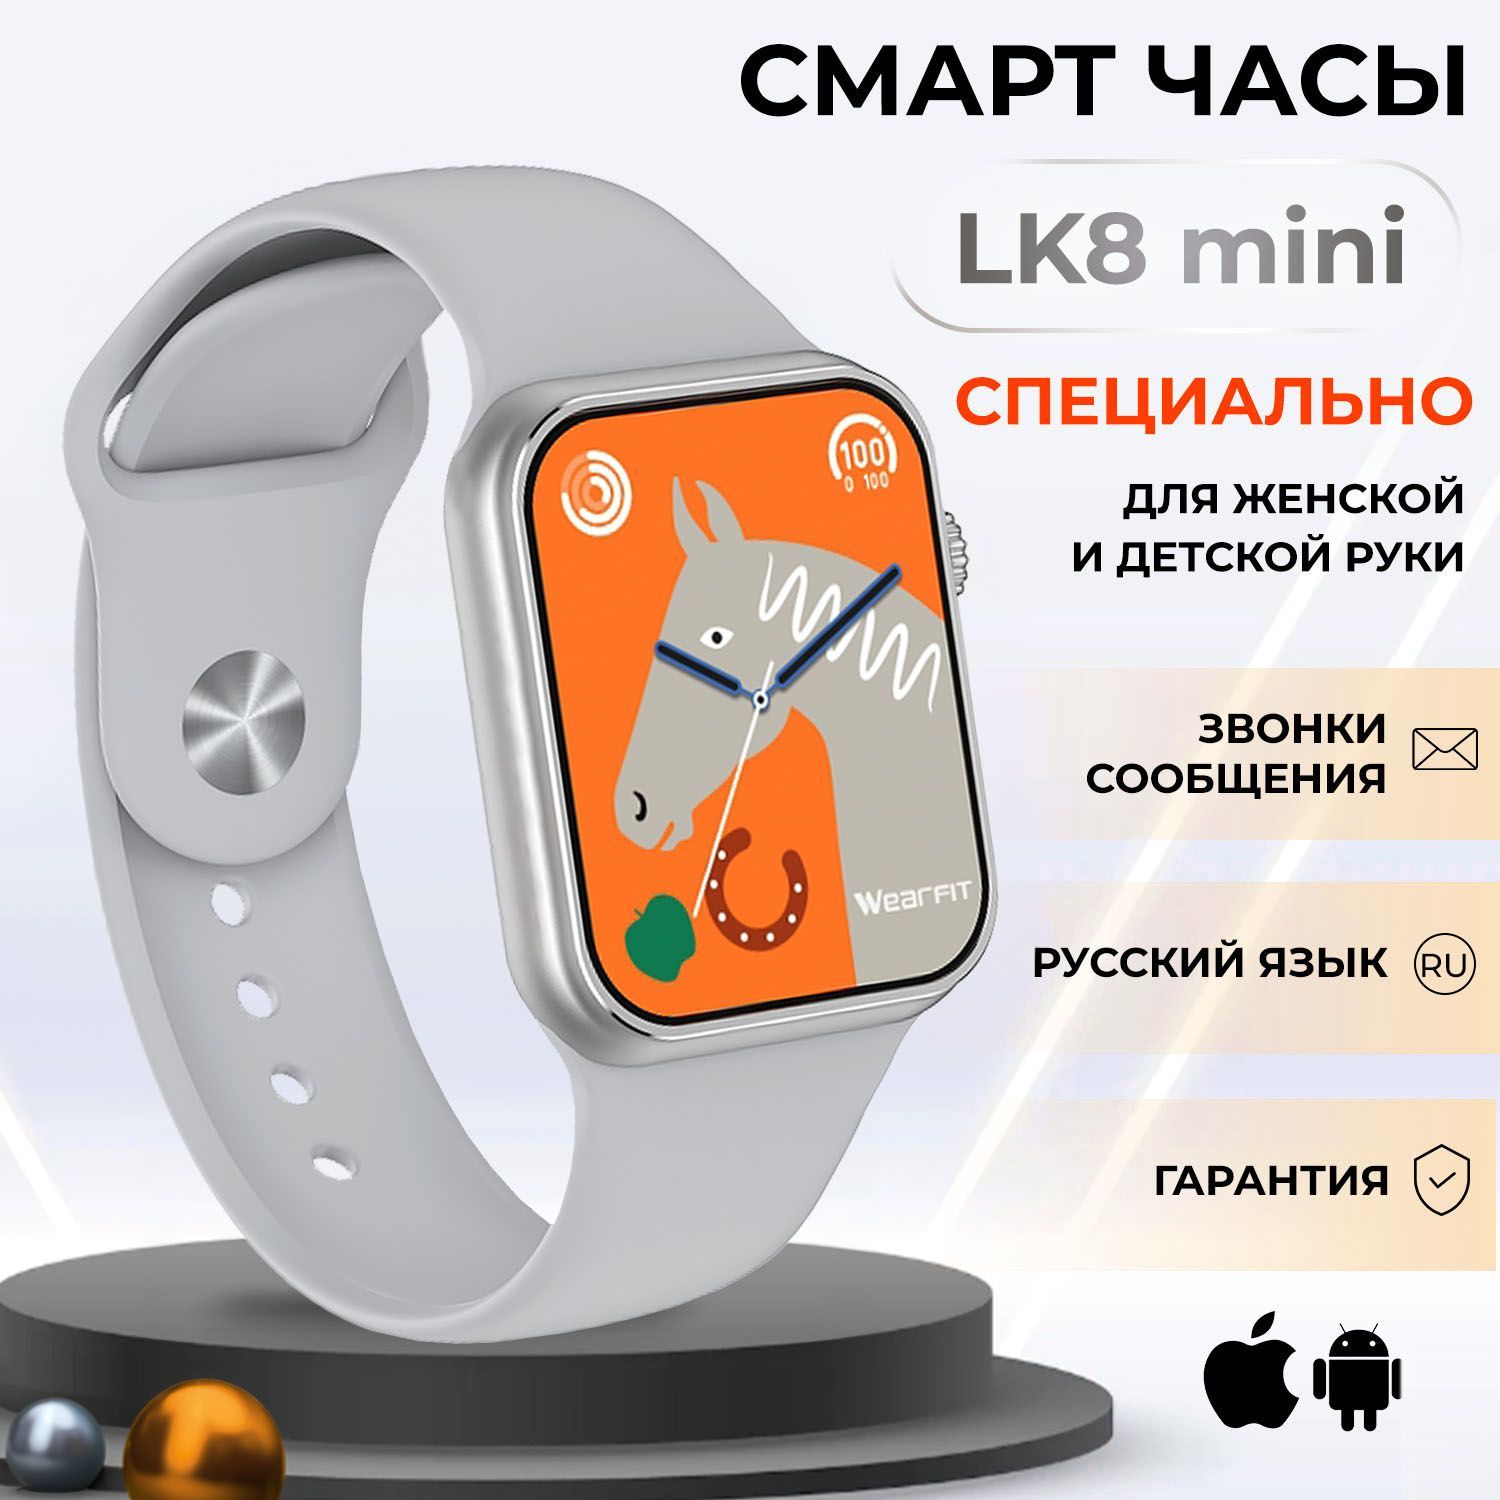 Смарт часы lk8. LK 8 Mini Smart watch. ЛК 8 про смарт часы. Умные часы LK gt4 Mini. Как подключить часы lk8